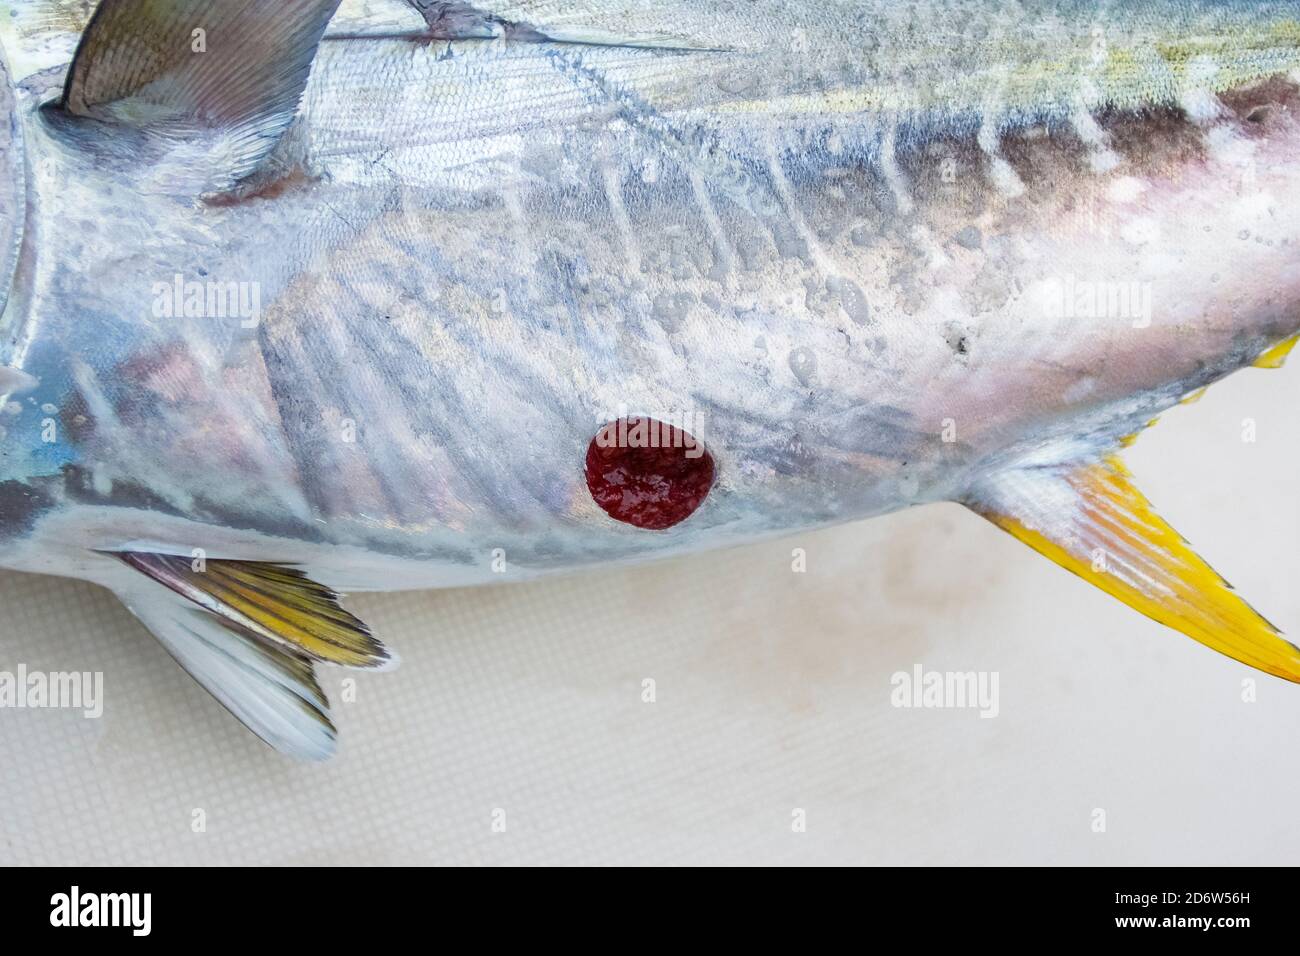 yellowfin tuna, Thunnus albacares, with a fresh bite wound from cookiecutter shark, Isistius brasiliensis, Kona Coast, Big Island, Hawaii, USA, Pacifi Stock Photo